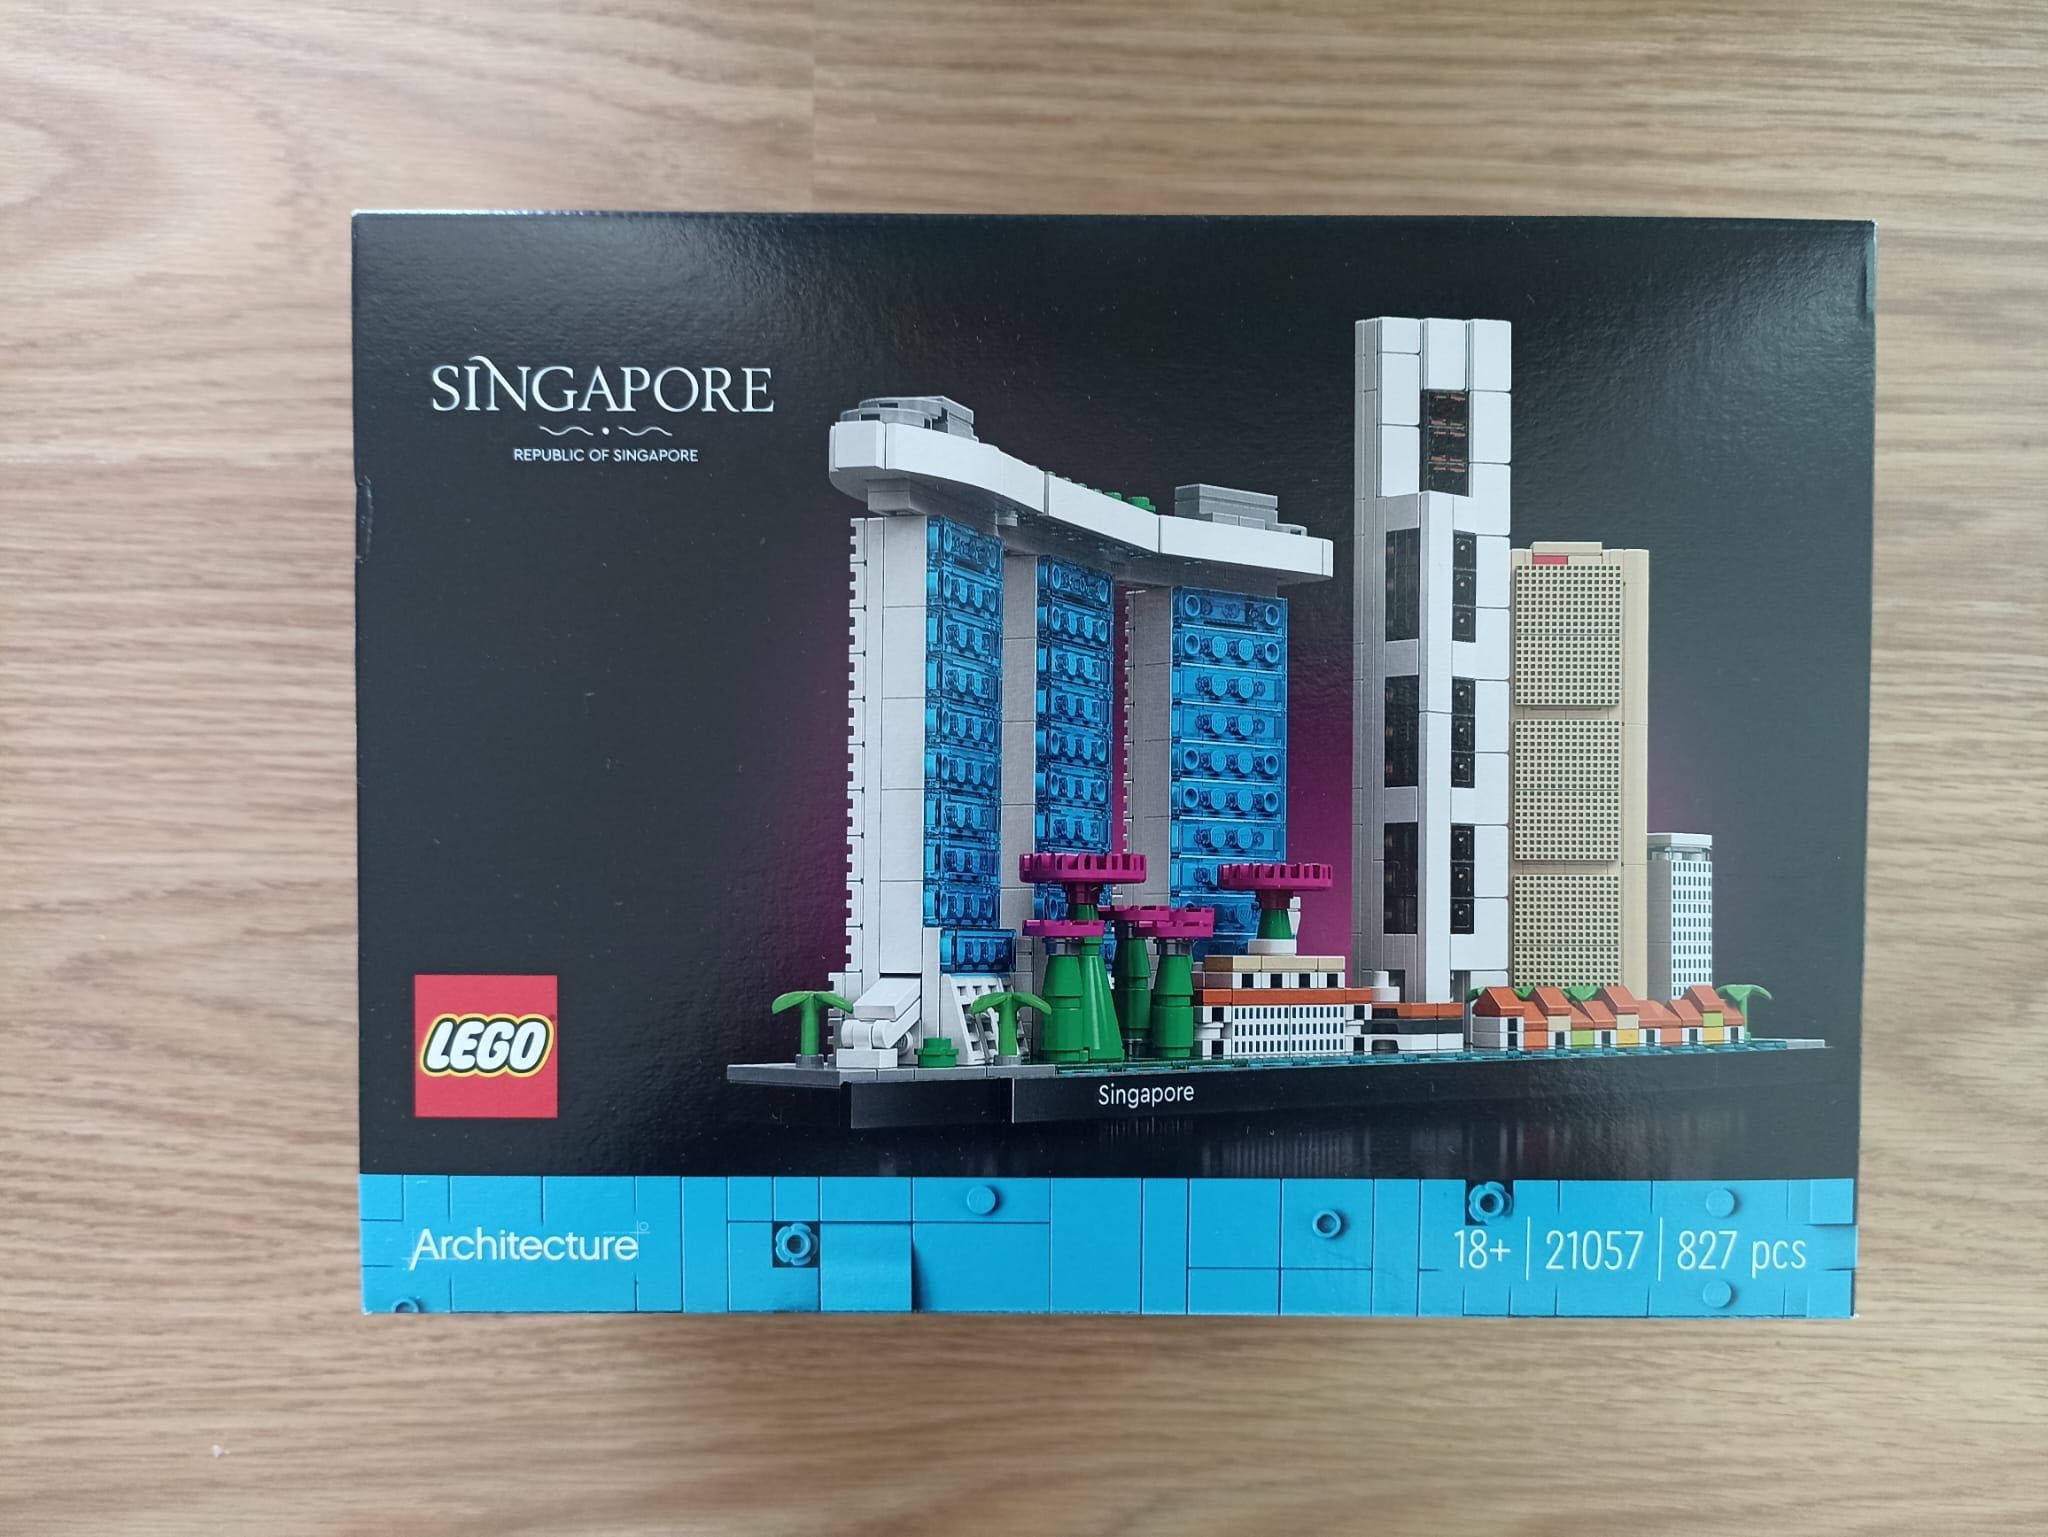 Lego Architecture "Singapore" - 21057